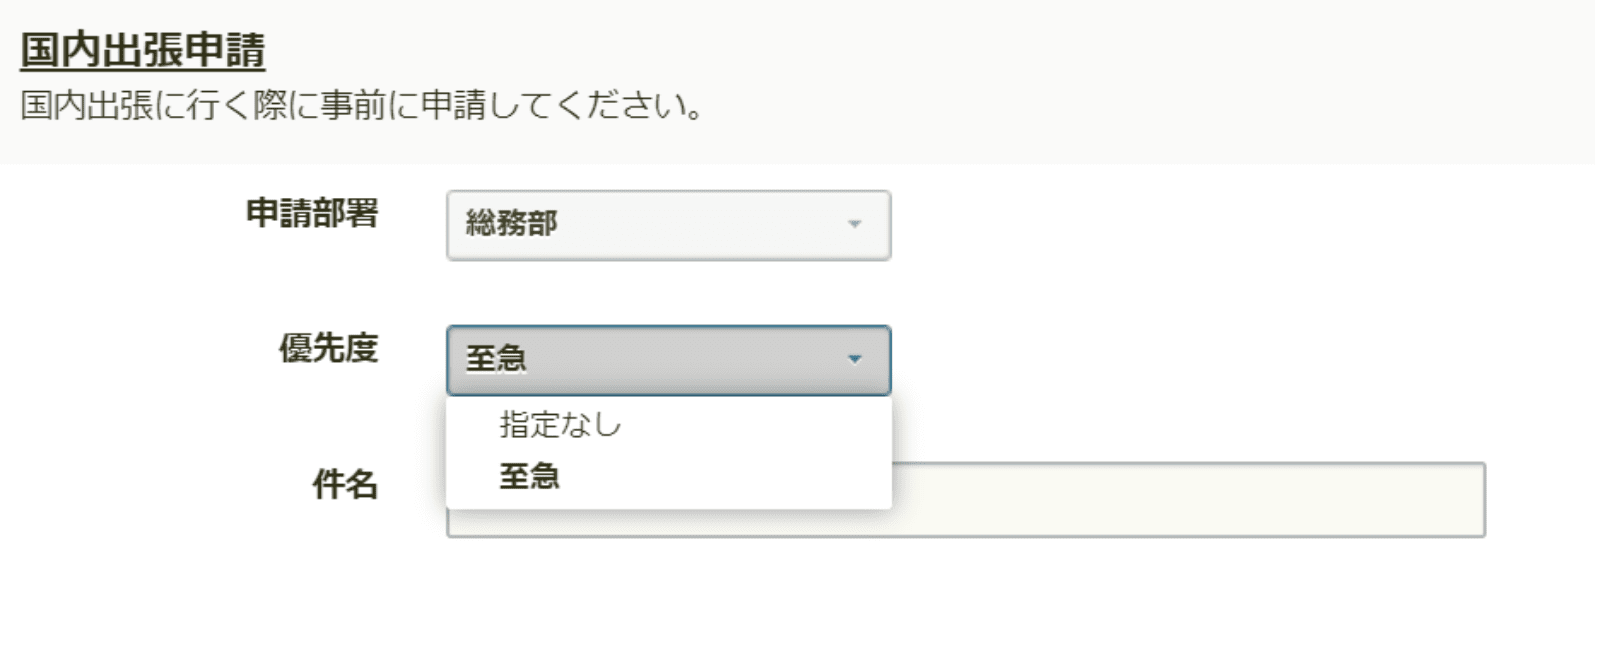 rakumo ワークフロー 優先度の選択画面